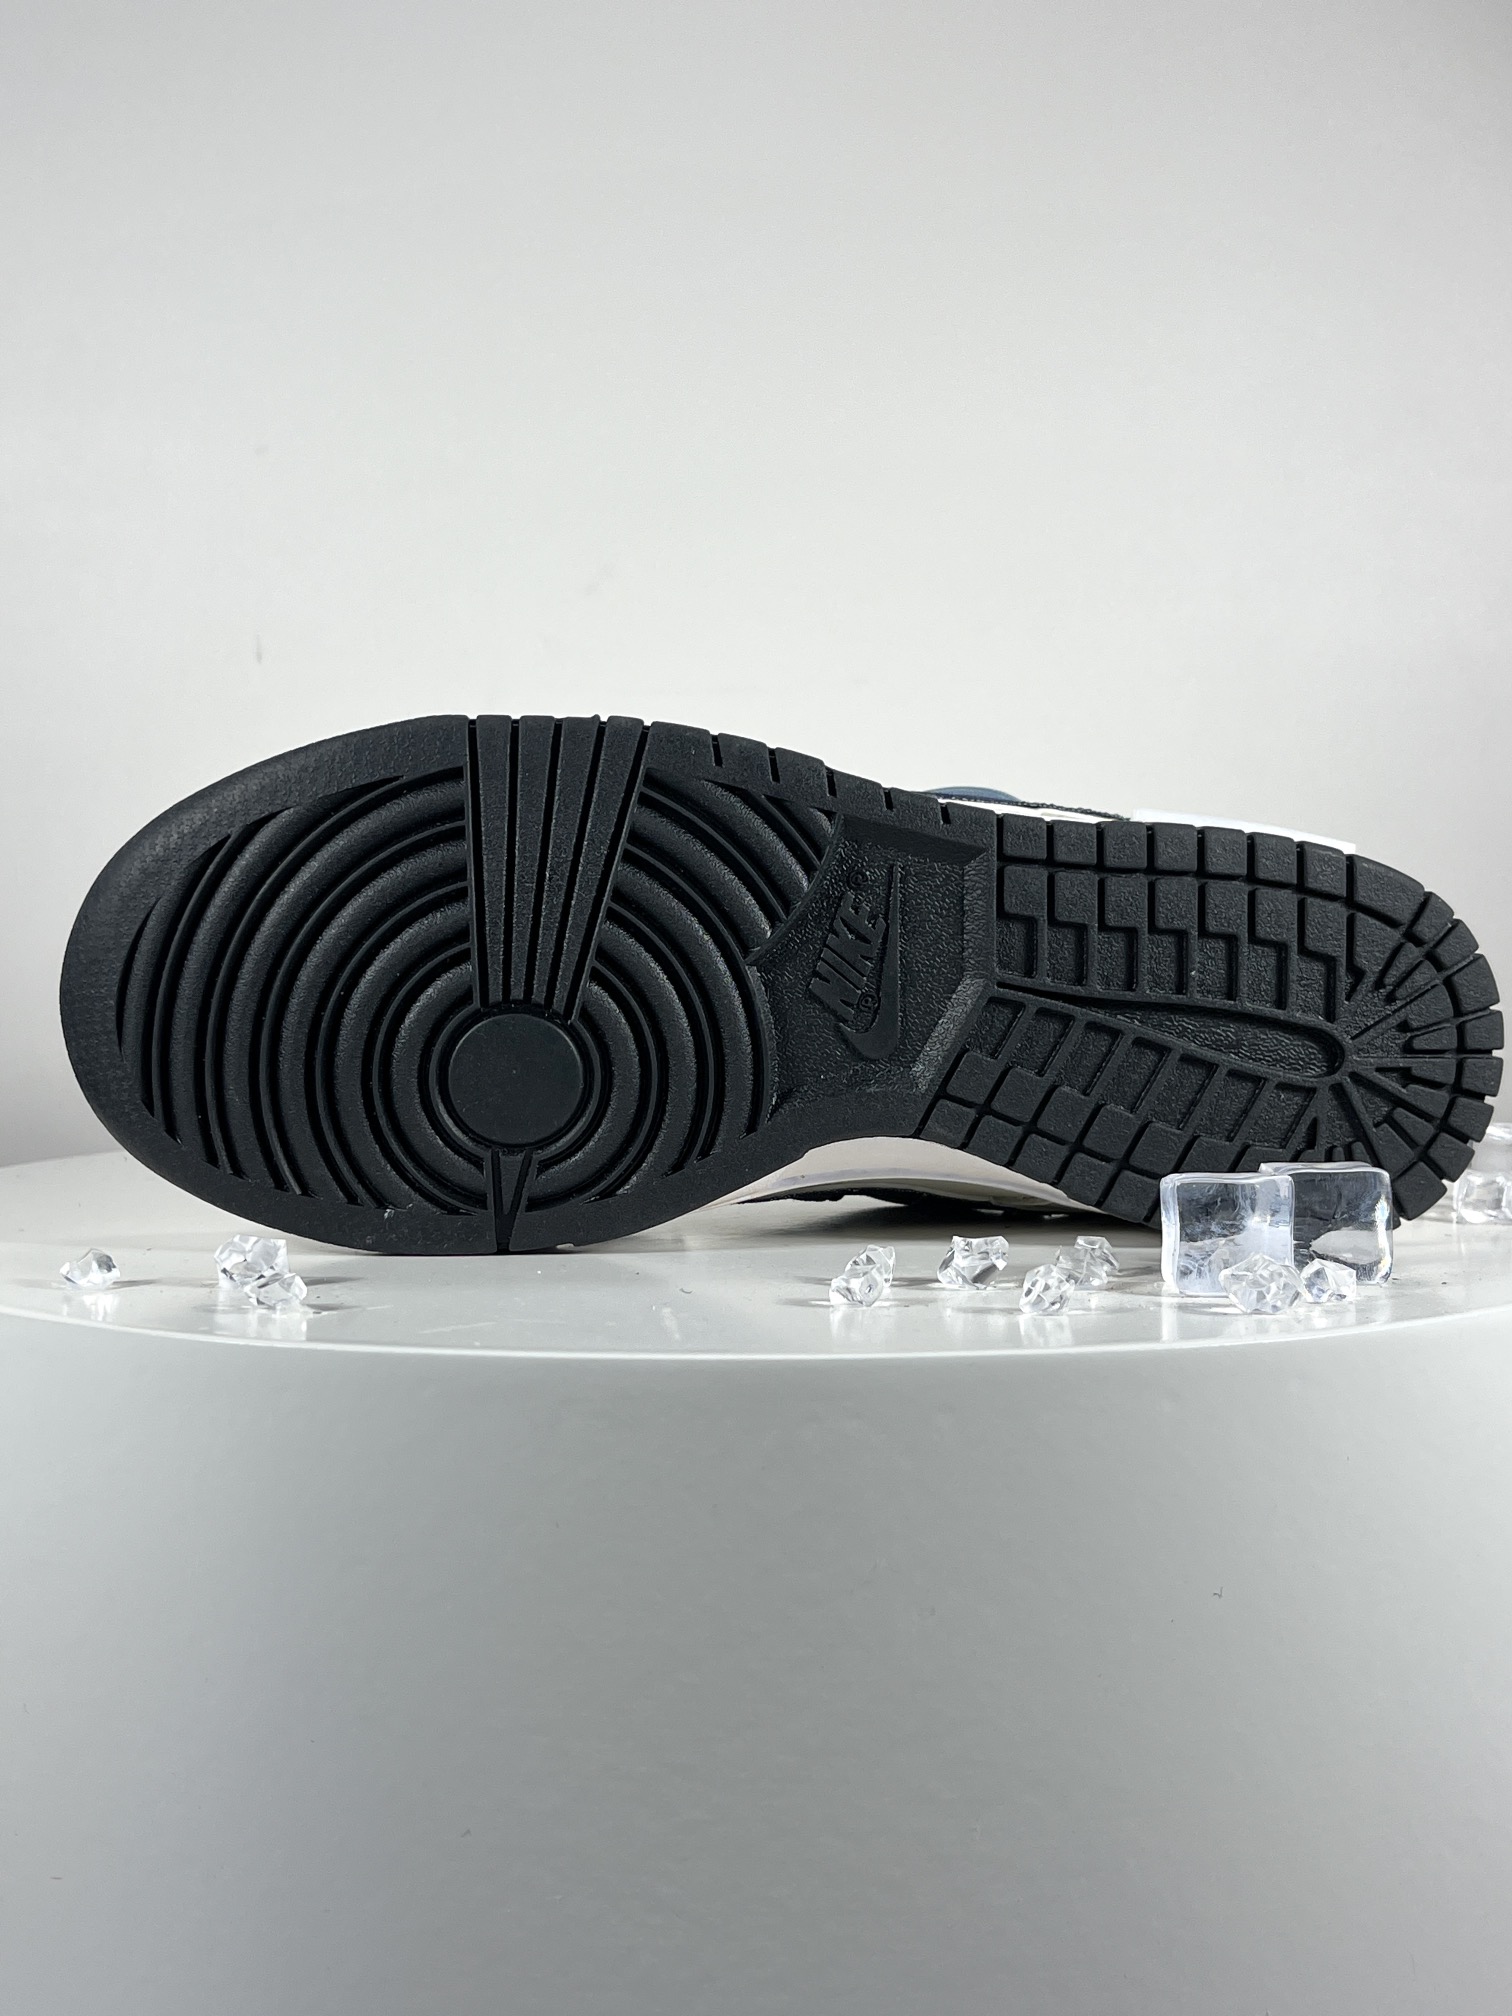 NikeDunkLow雨后海洋棕蓝此款整体围绕熊猫恶作剧七夕主题设计鞋身整体采用专属颜料重新喷涂特殊原创